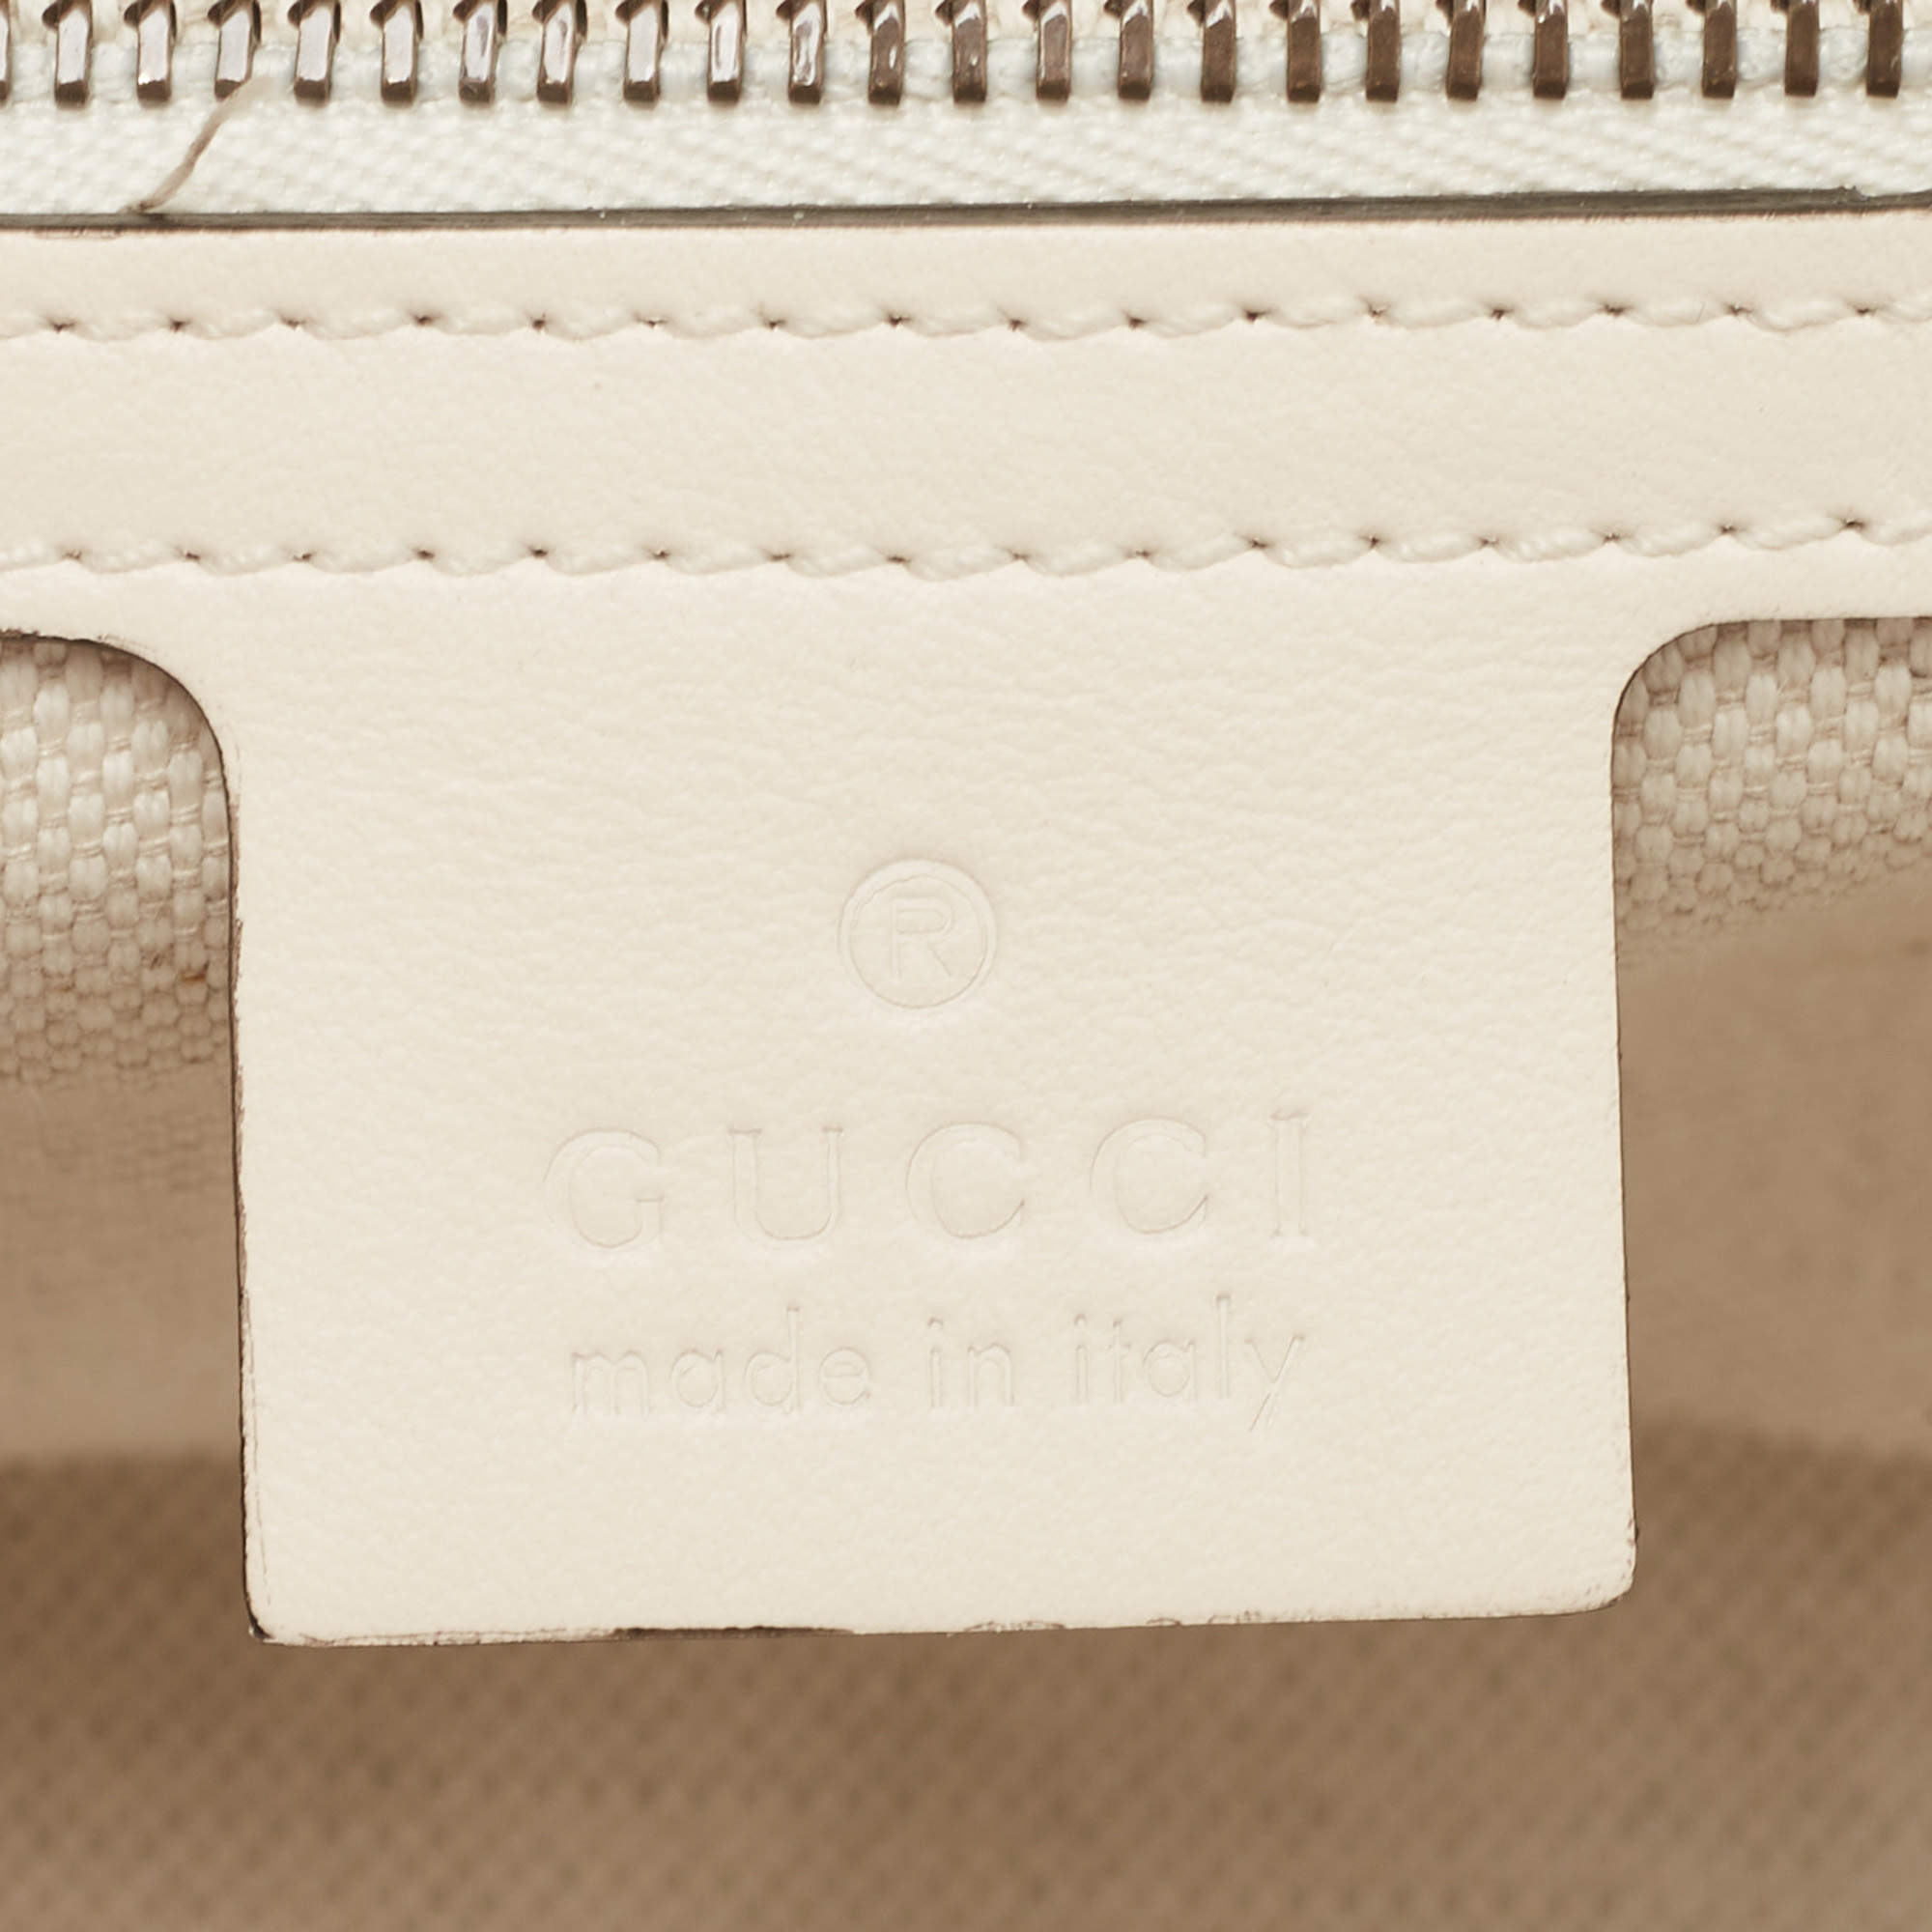 Leather handbag Gucci X Balenciaga Beige in Leather - 35714719